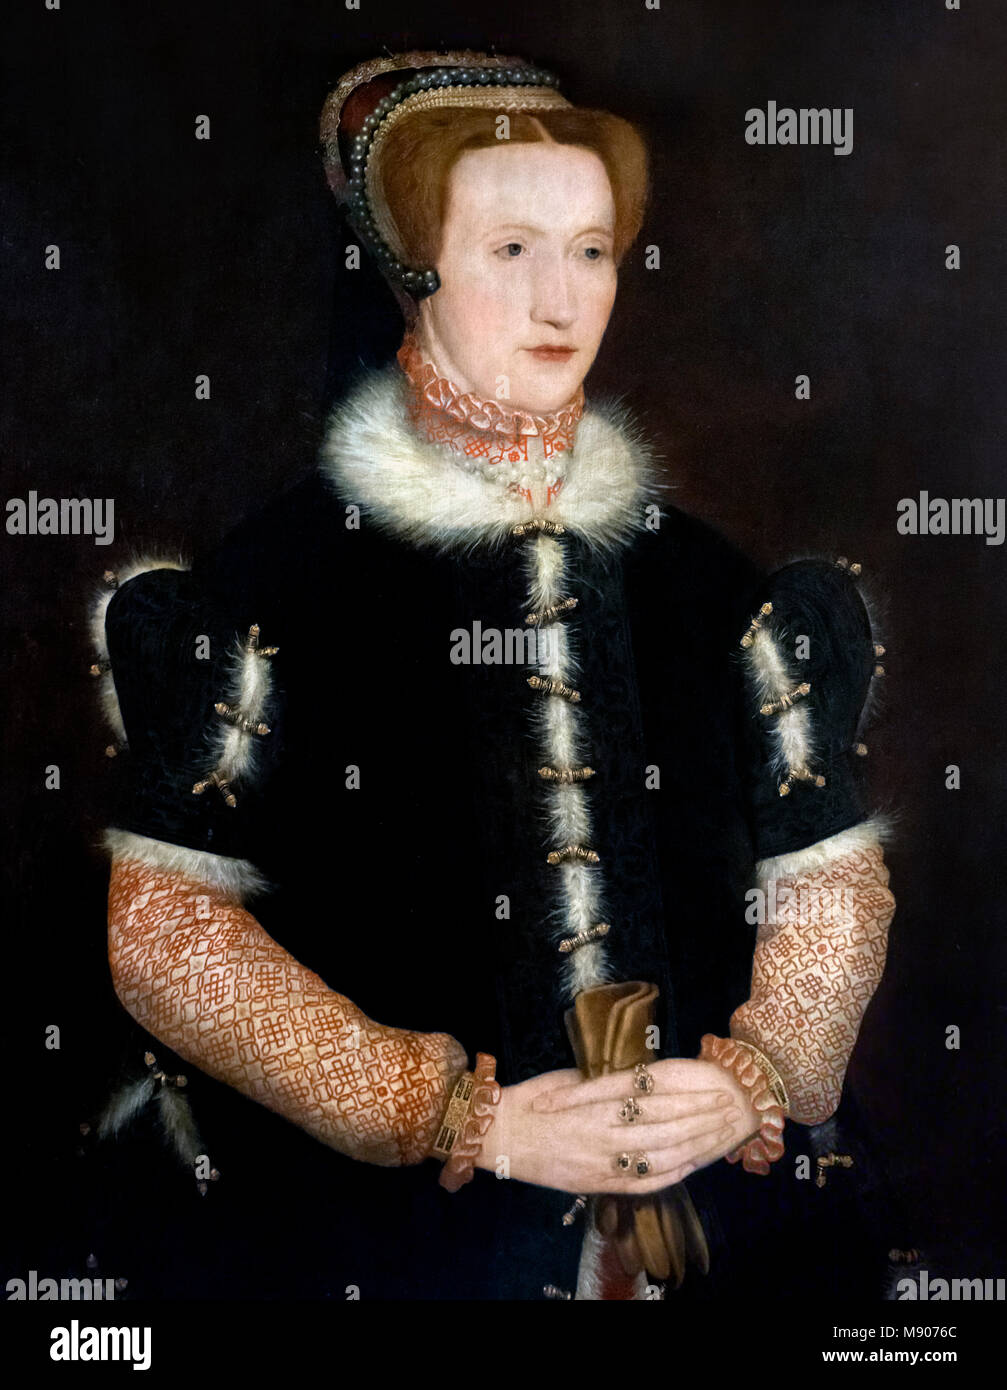 Bess of Hardwick. Portrait of Elizabeth Cavendish, later Elizabeth Talbot, Countess of Shrewsbury (c. 1527-1608), c.1560. Stock Photo